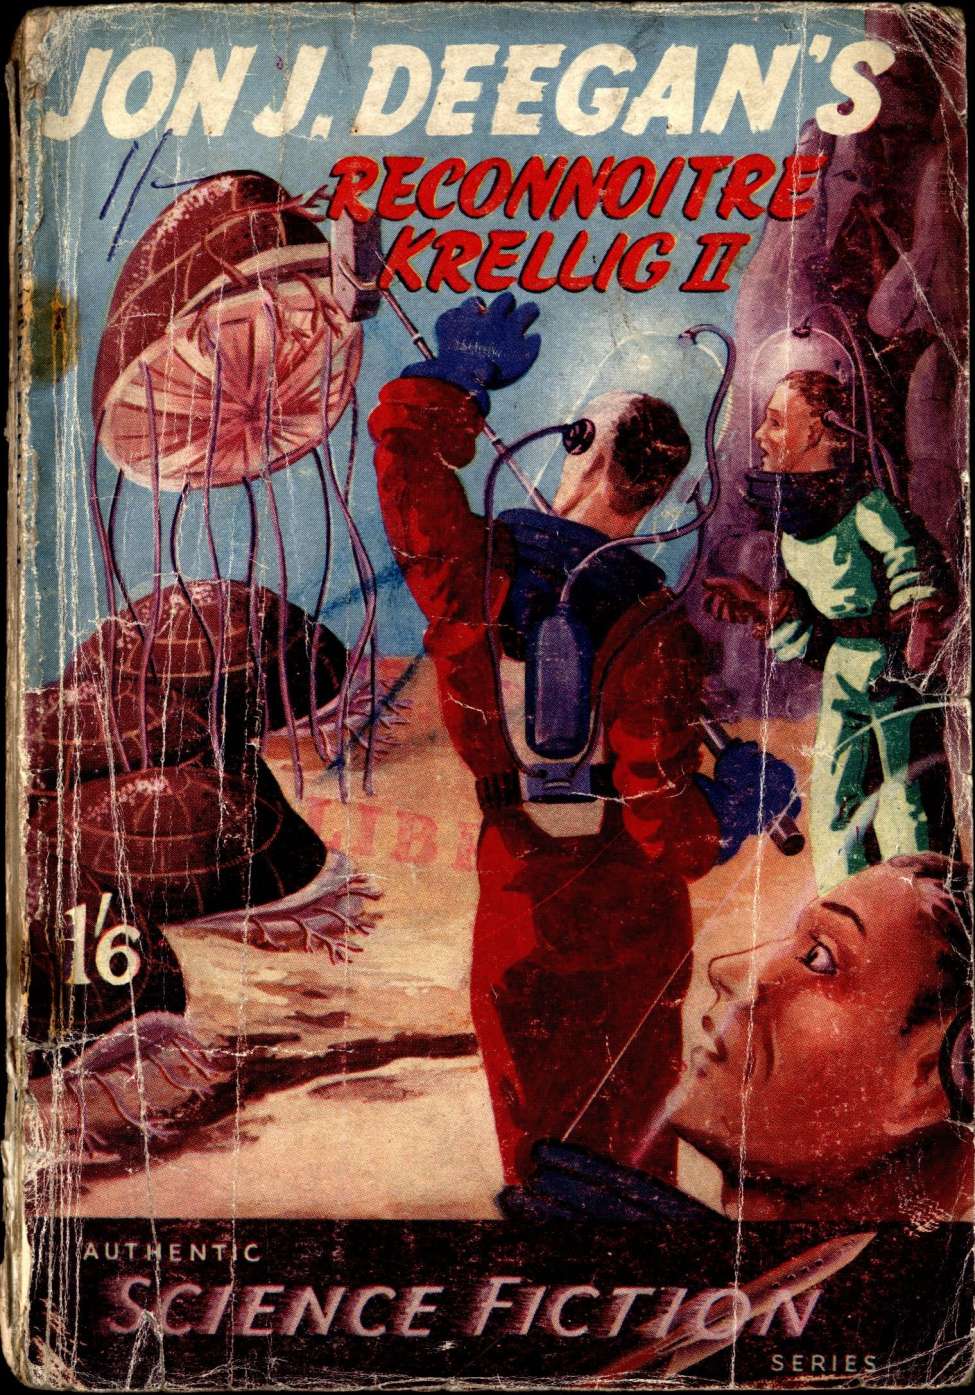 Book Cover For Authentic Science Fiction 2 - Reconnoitre Krellig II - Jon J. Deegan